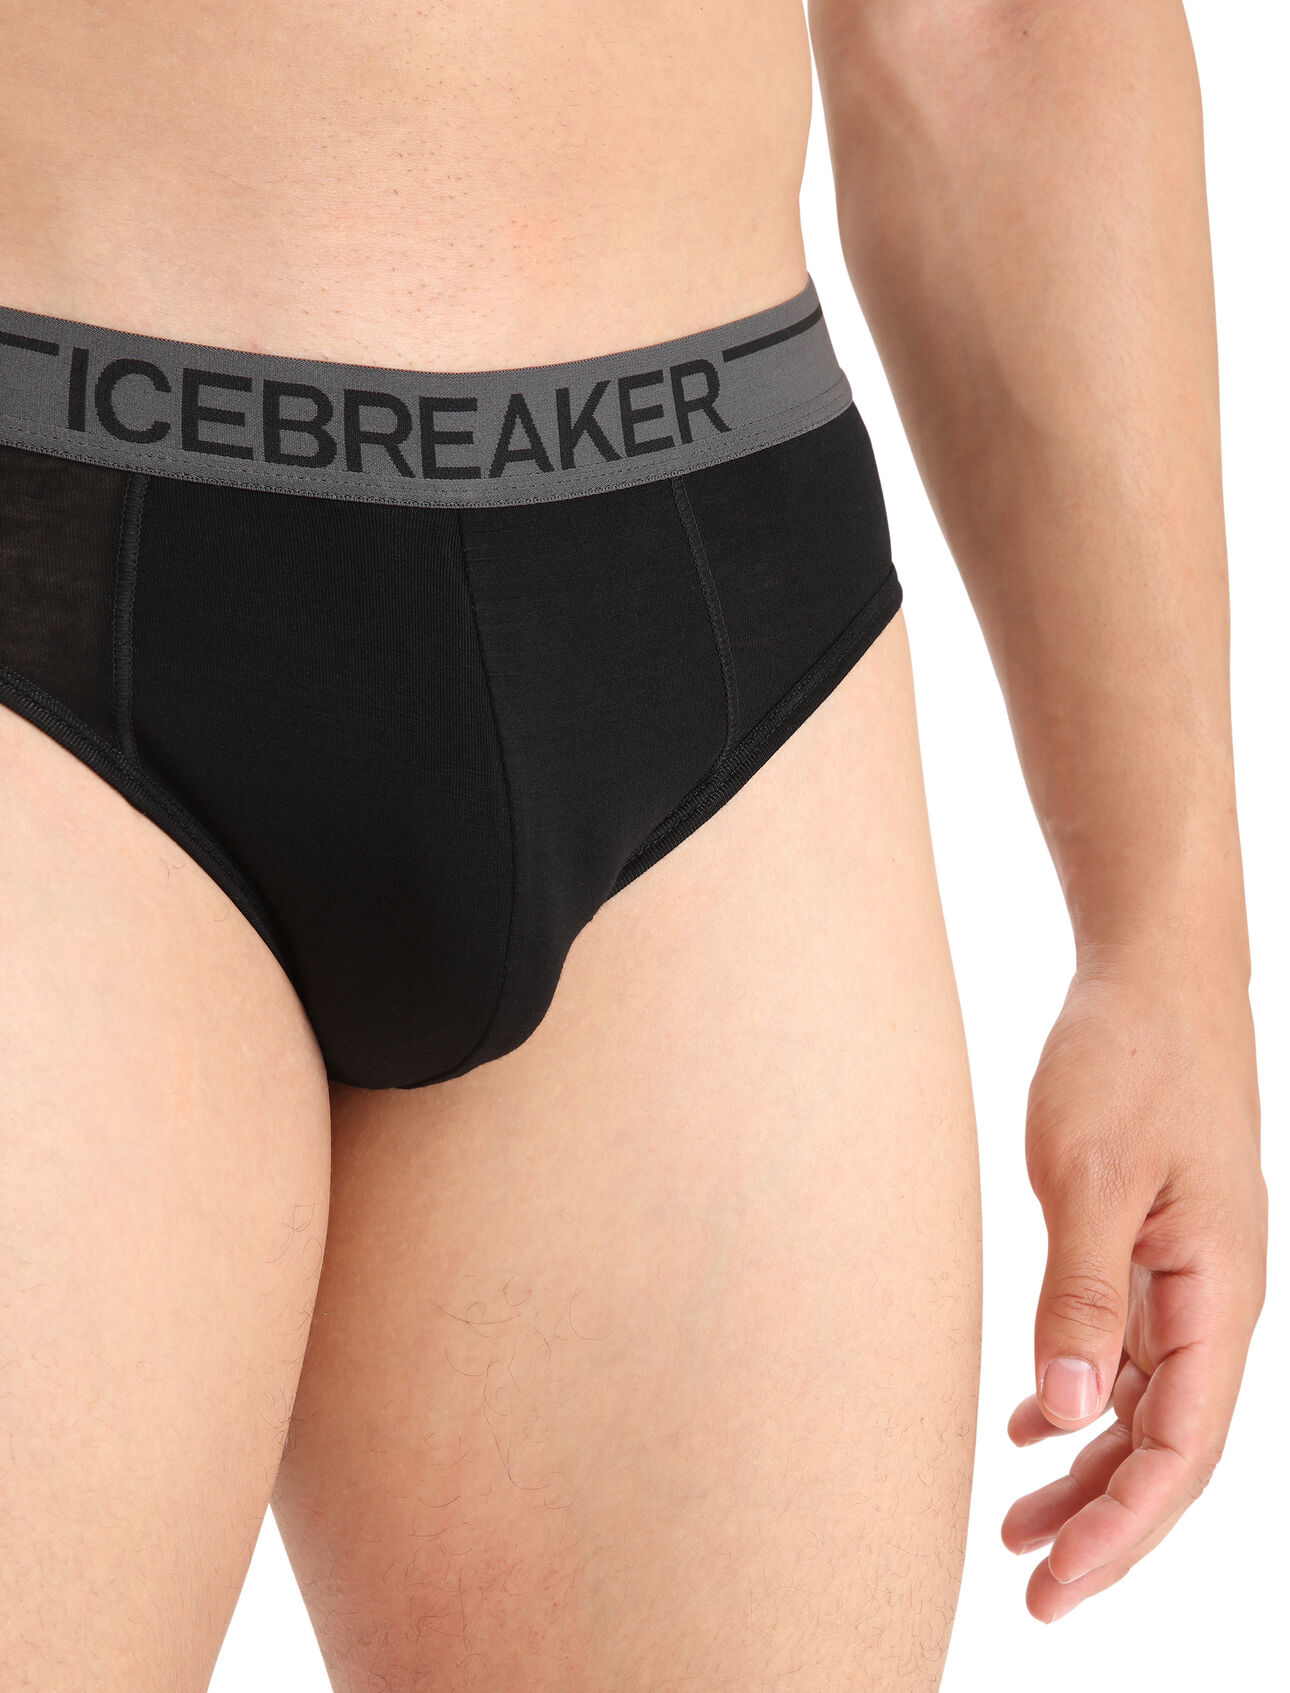  Icebreaker Merino Anatomica Mens Boxer Briefs, Wool Base  Layer For Cold Weather - Soft, Durable Underwear